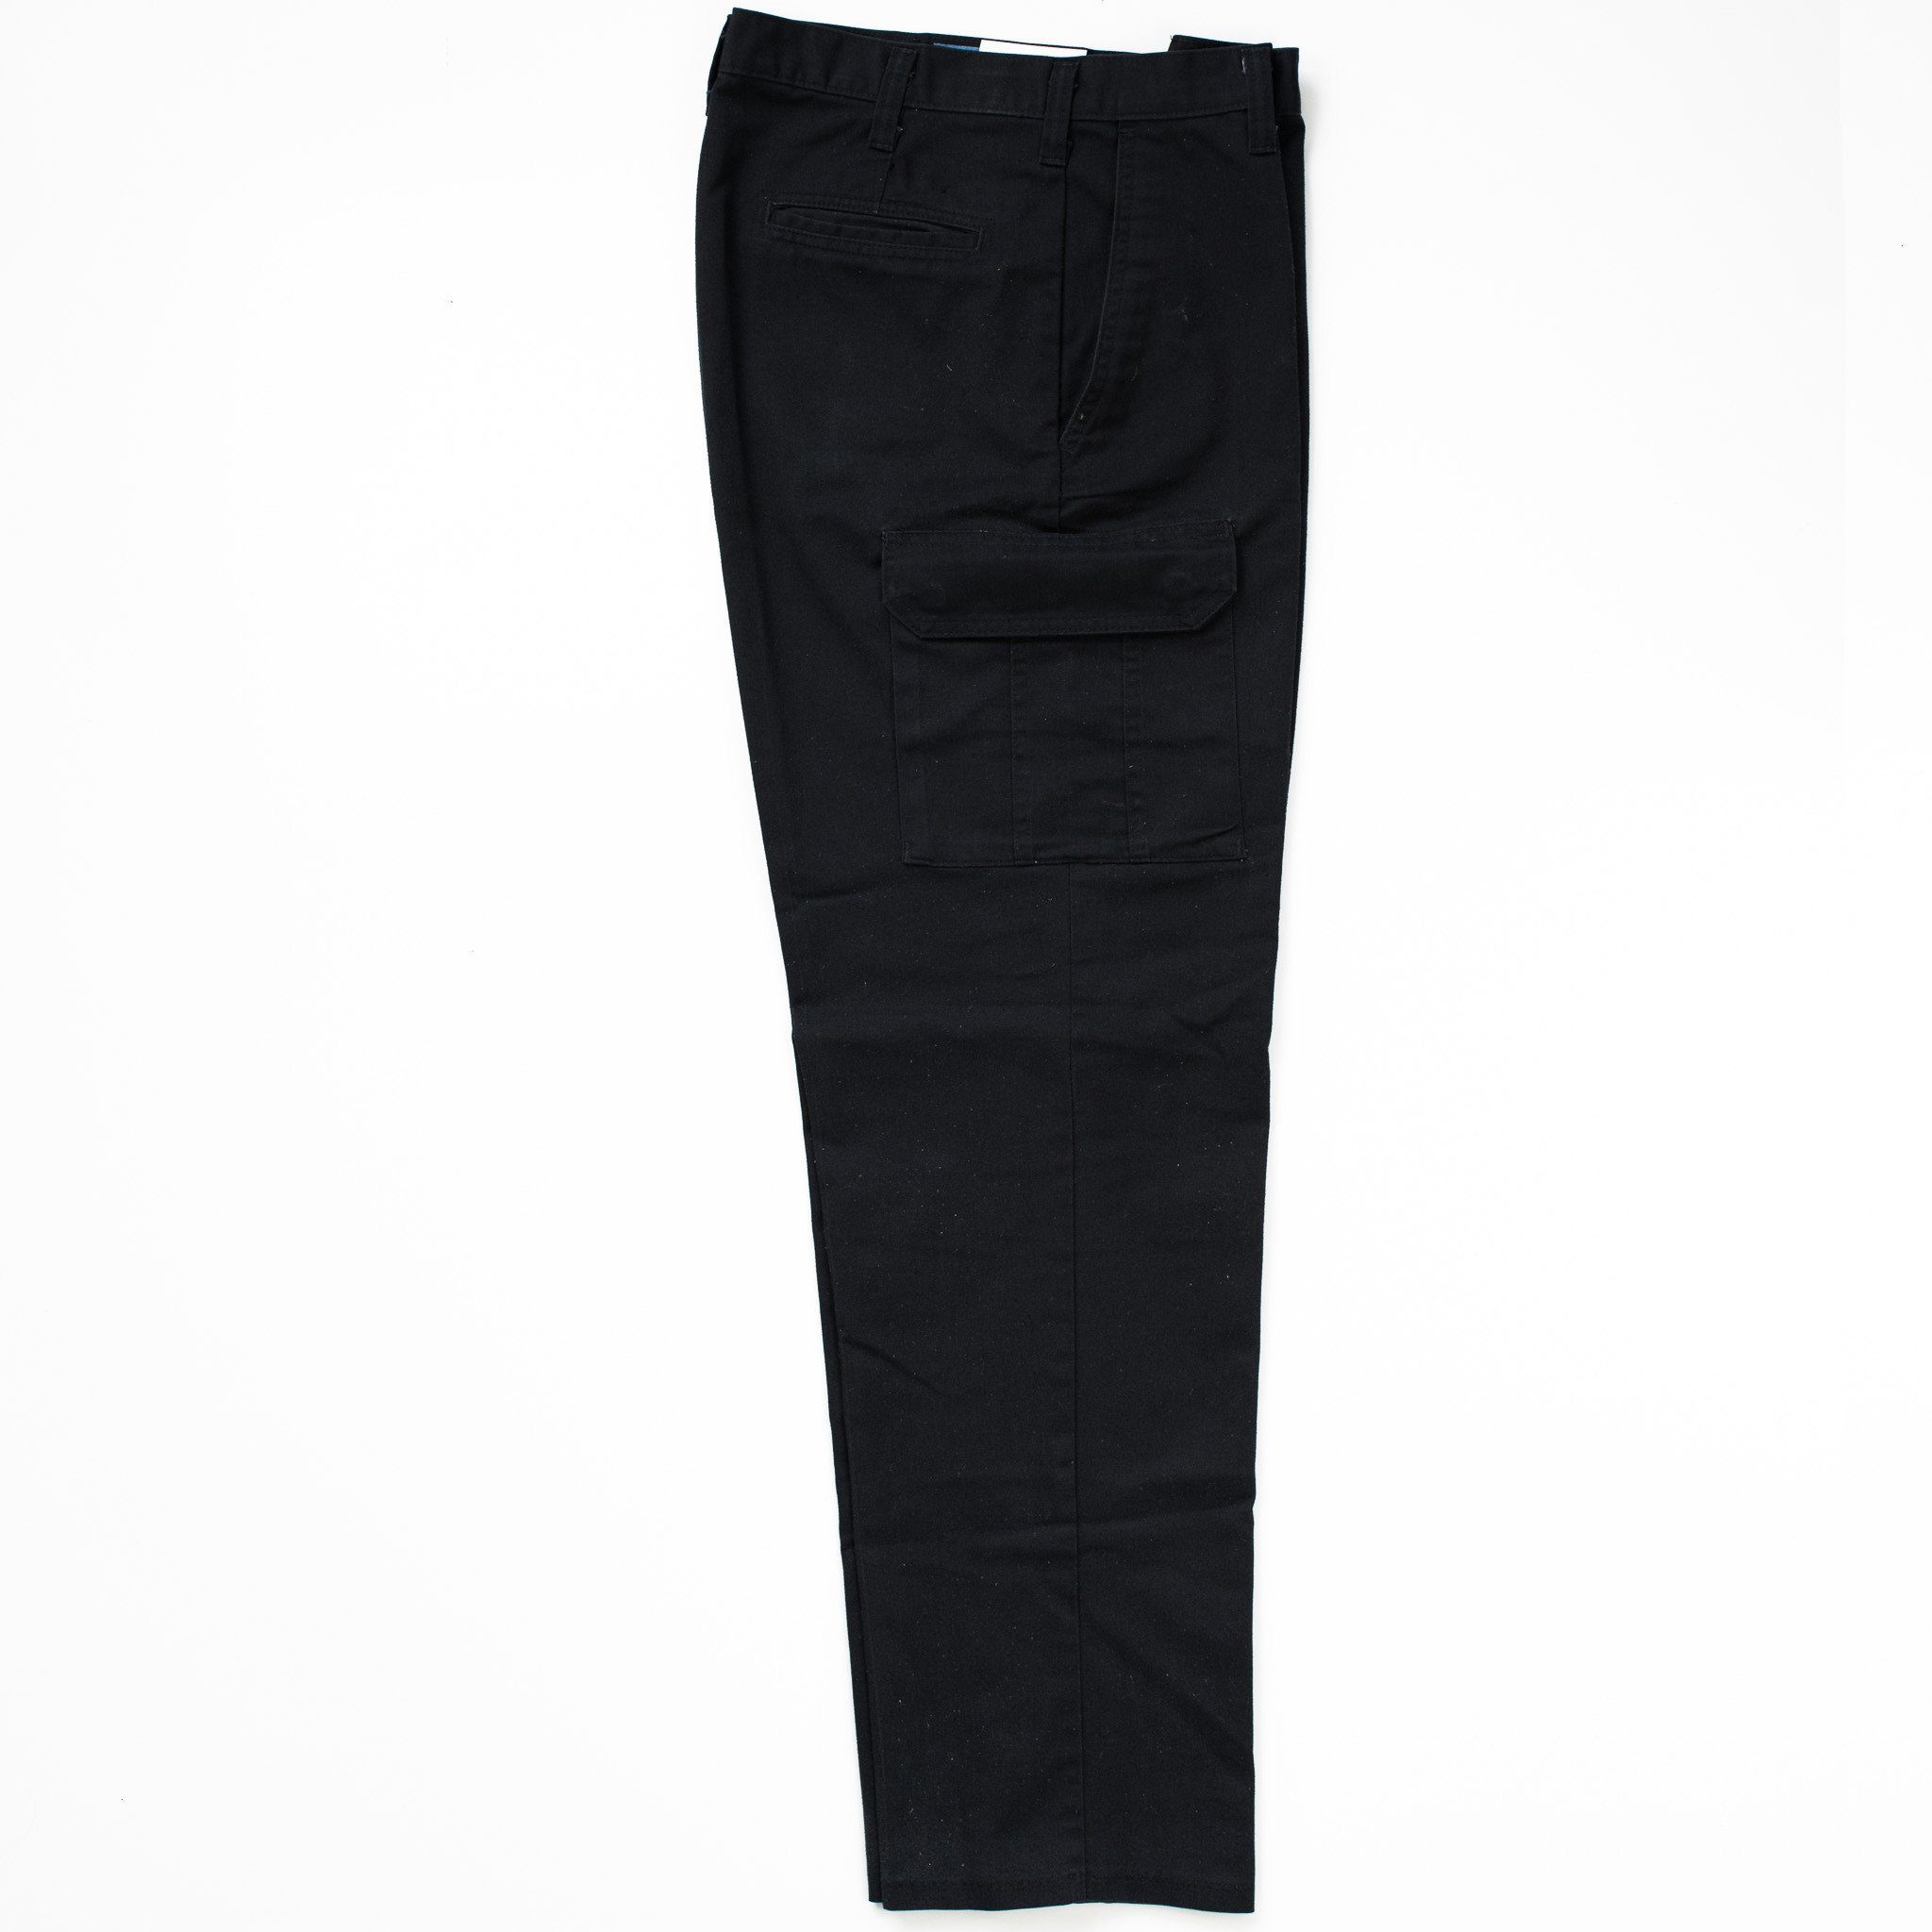 Used Black Cargo Work Pants | Walt's Used Workwear